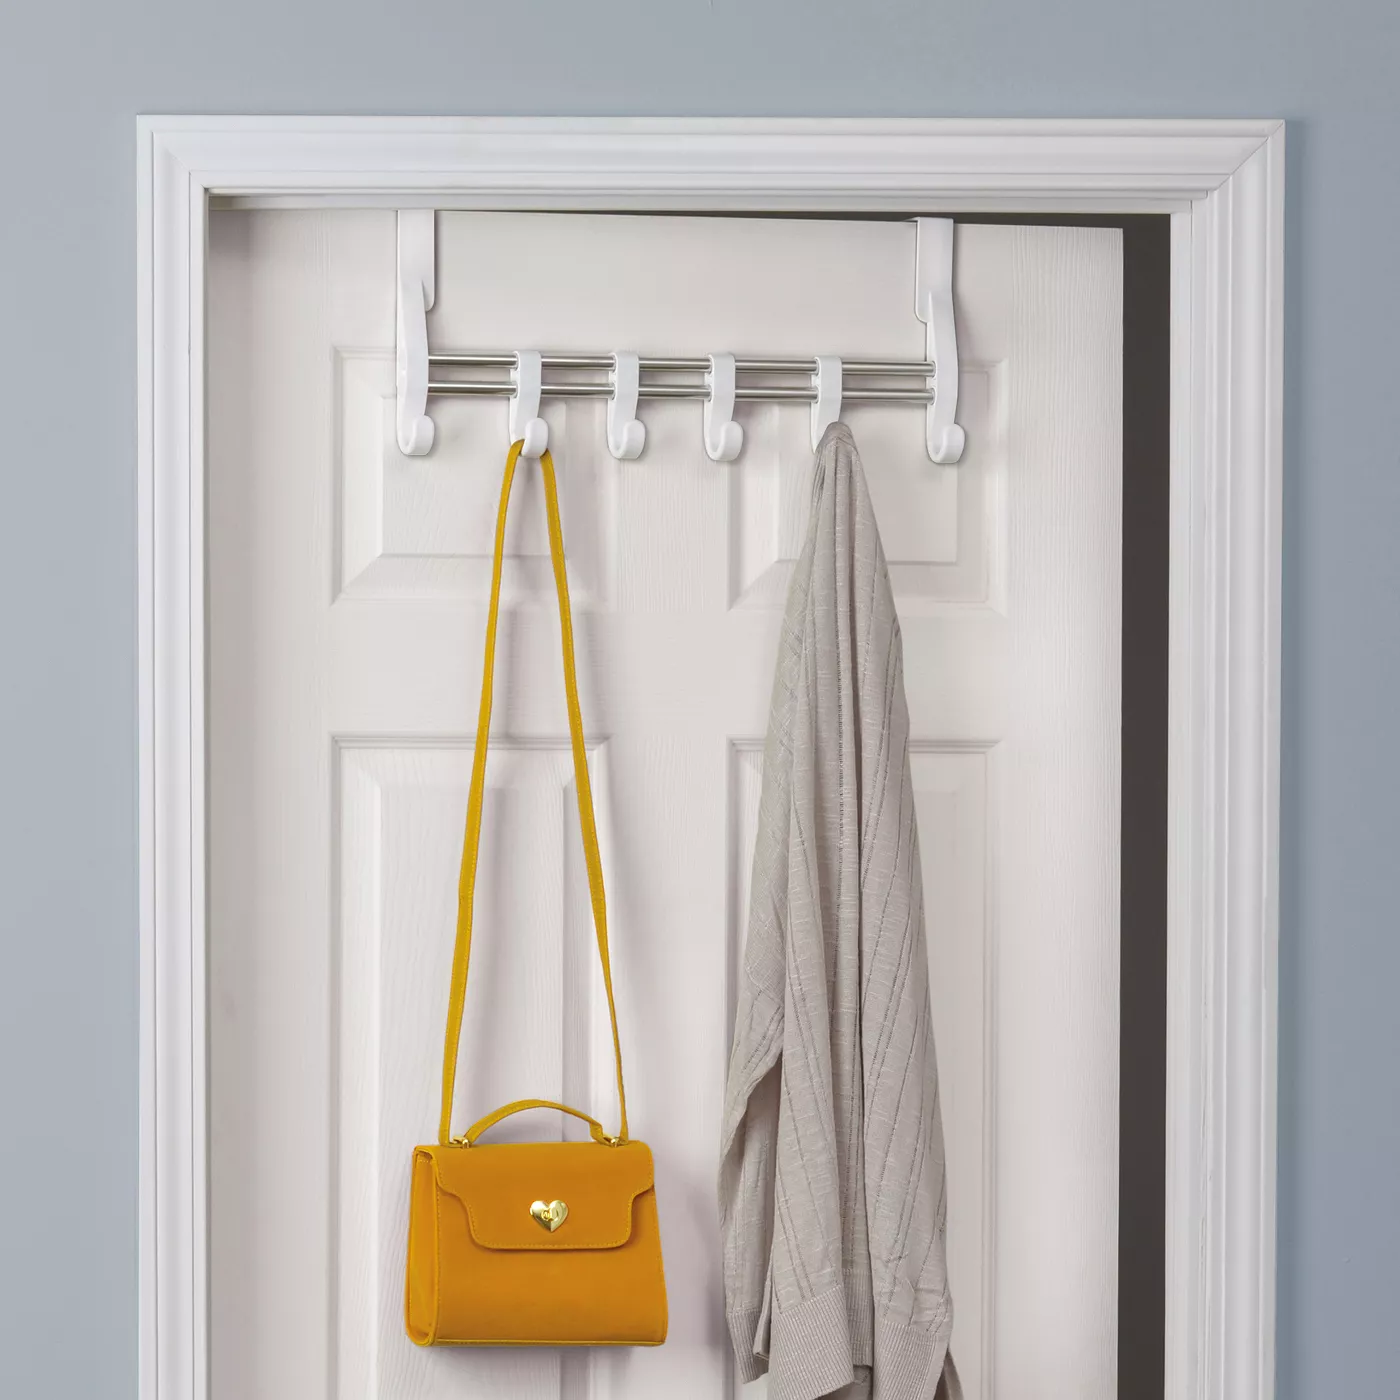 Lynk Over Door Adjustable Hook Accessory Organizer -Scarf, Belt, Hat, Jewelry Hanger - White - image 1 of 4